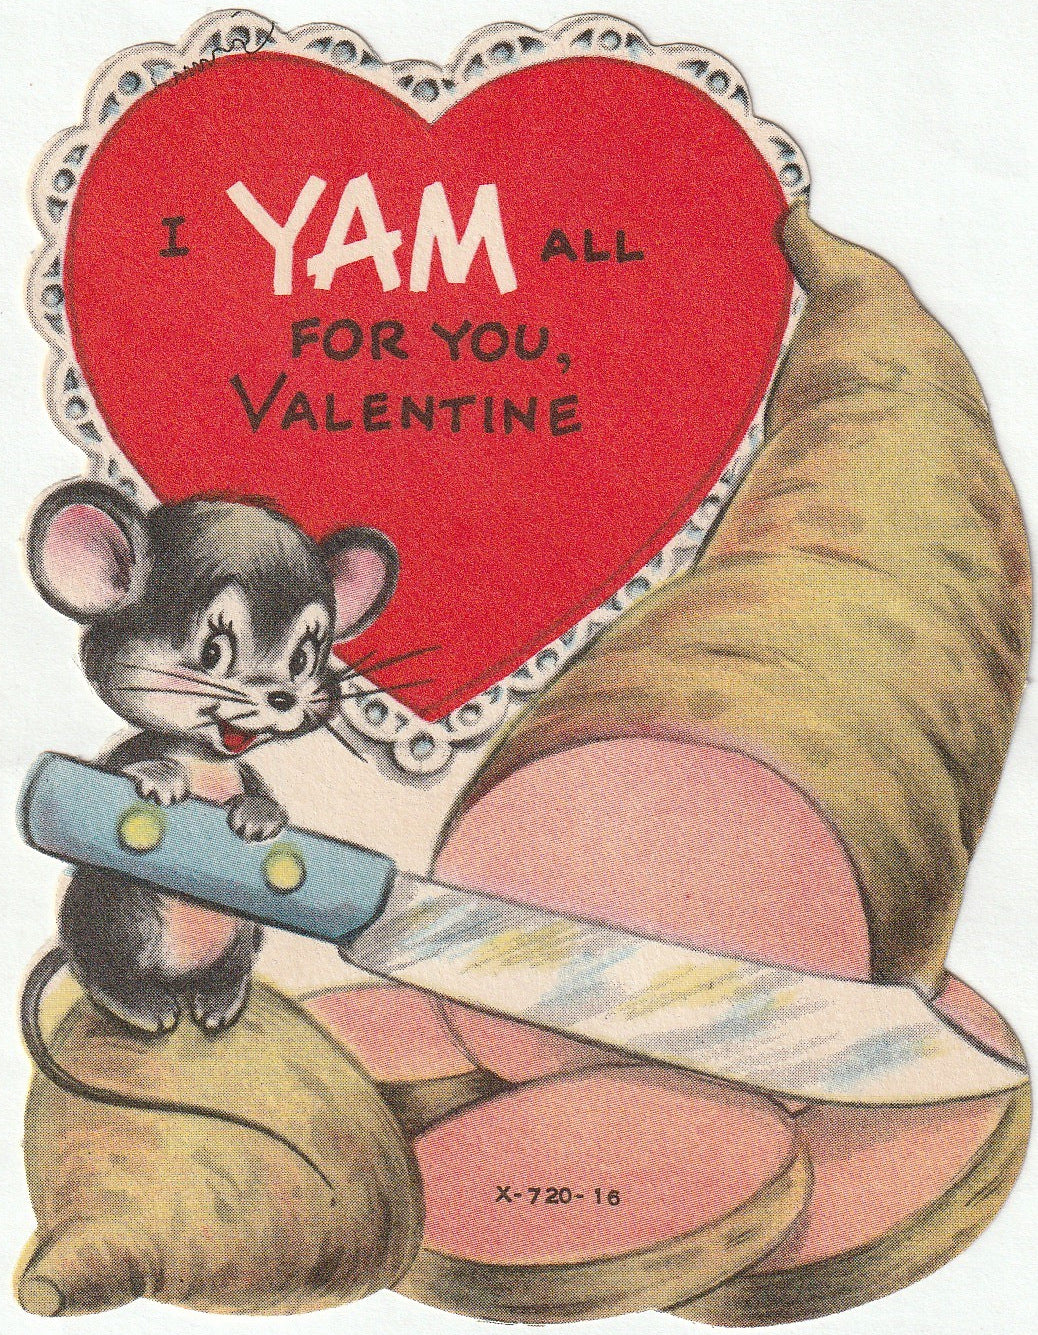 4 Vintage 1920s Valentine Cards / Postcards: Edwardian Era Couple